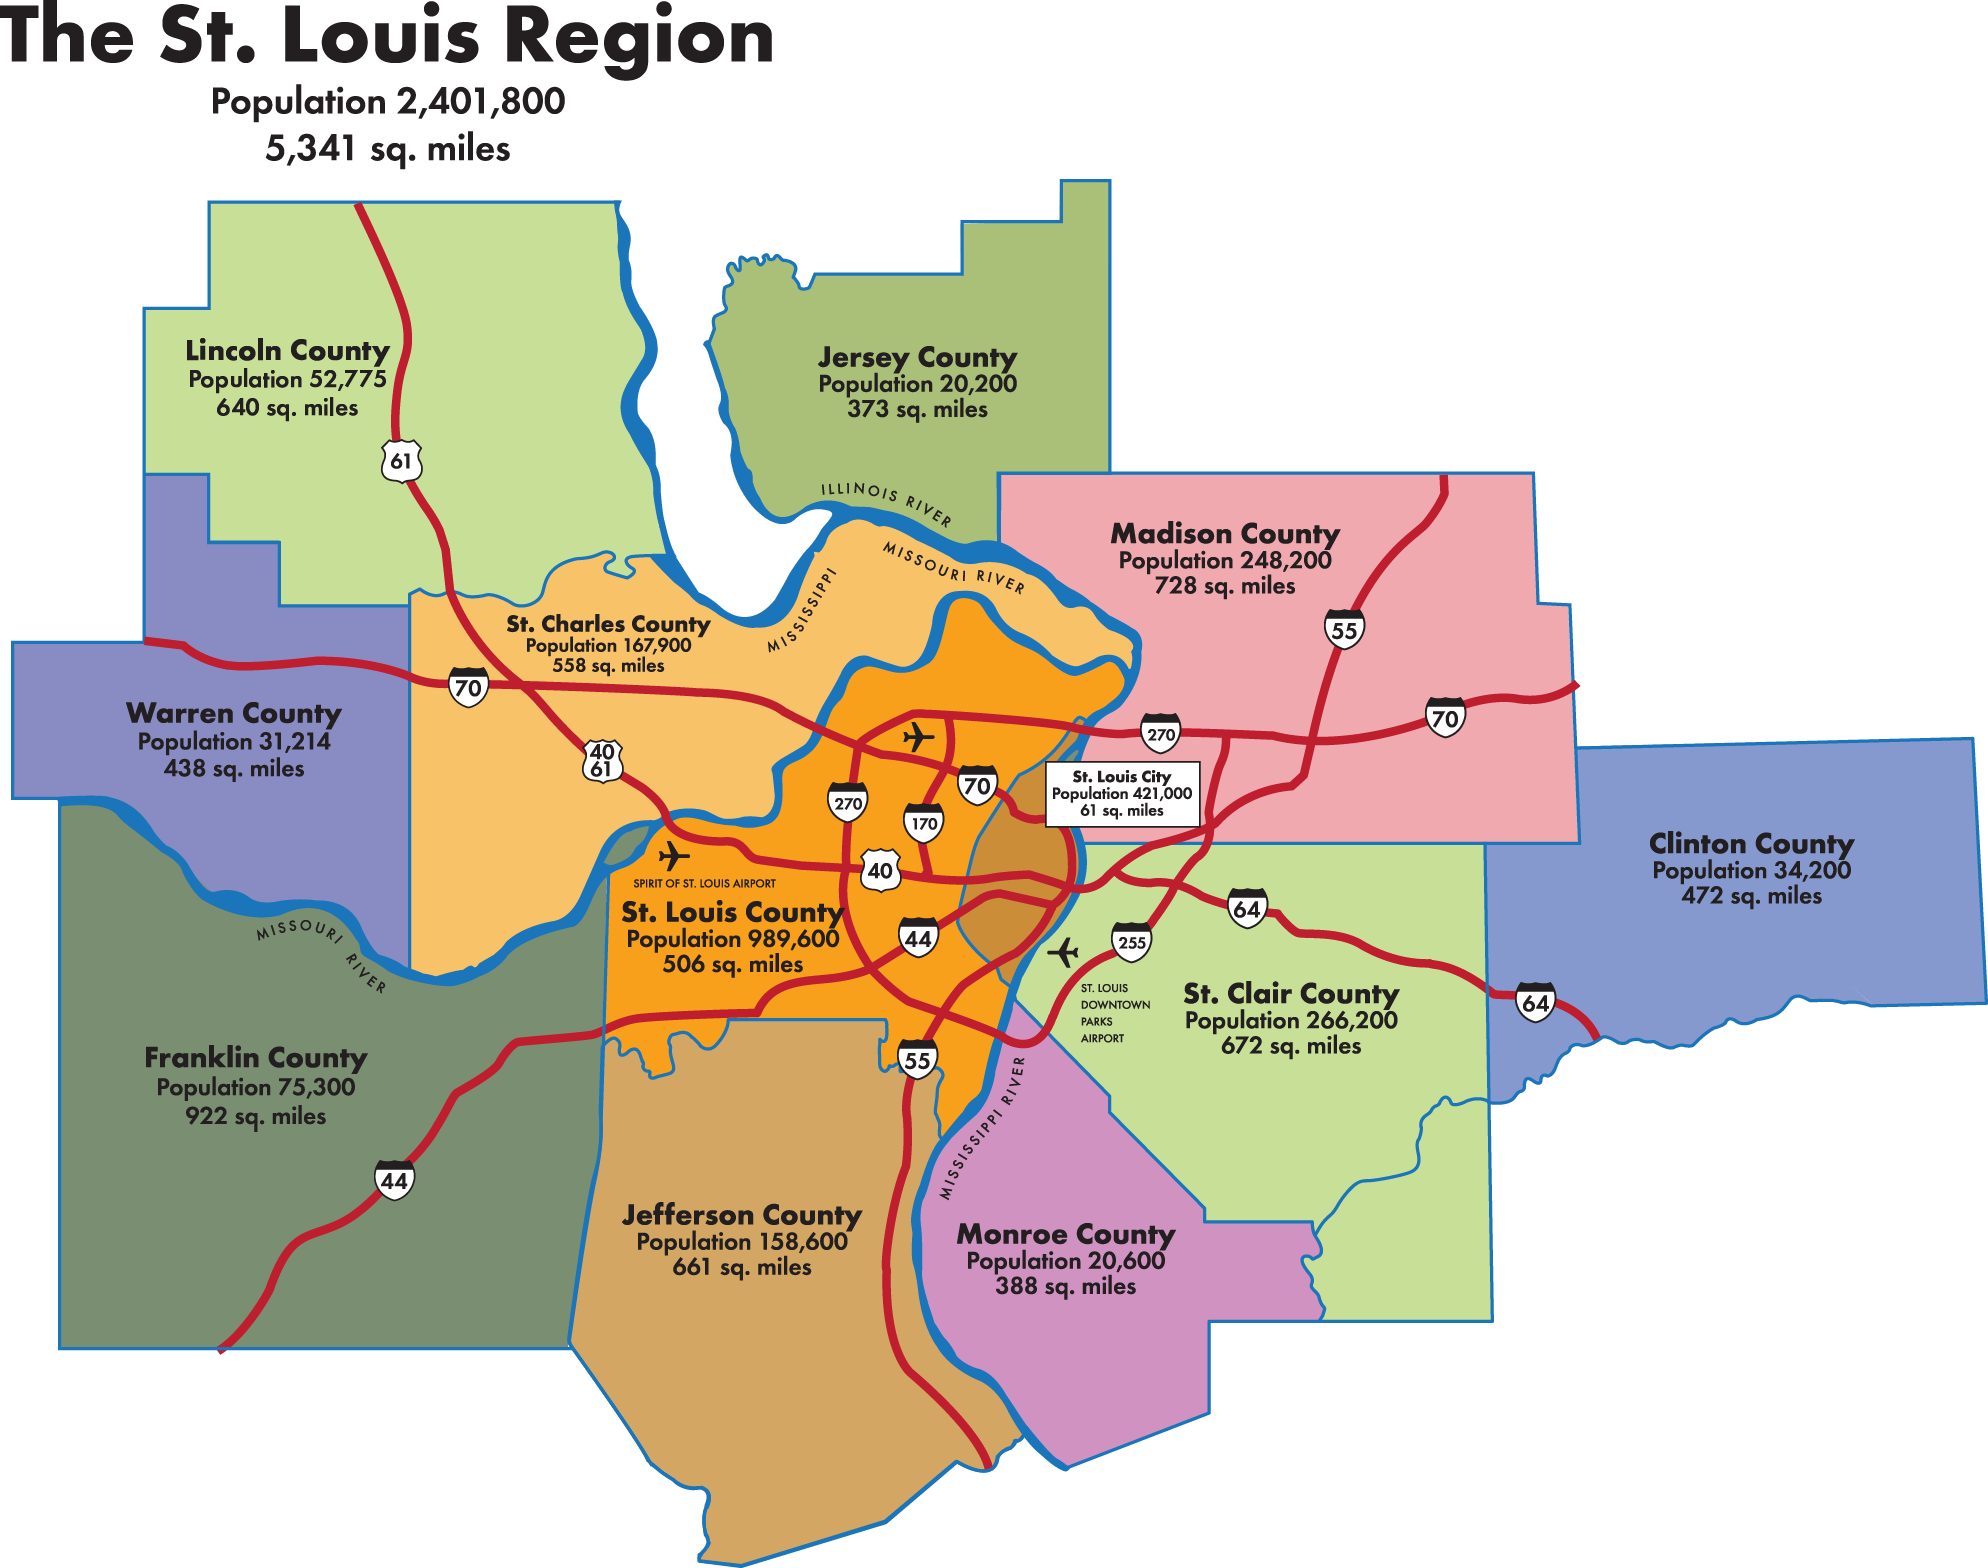 St. Louis Commercial Real Estate | St. Louis County Listings & ServicesJeff Eisenberg & Associates